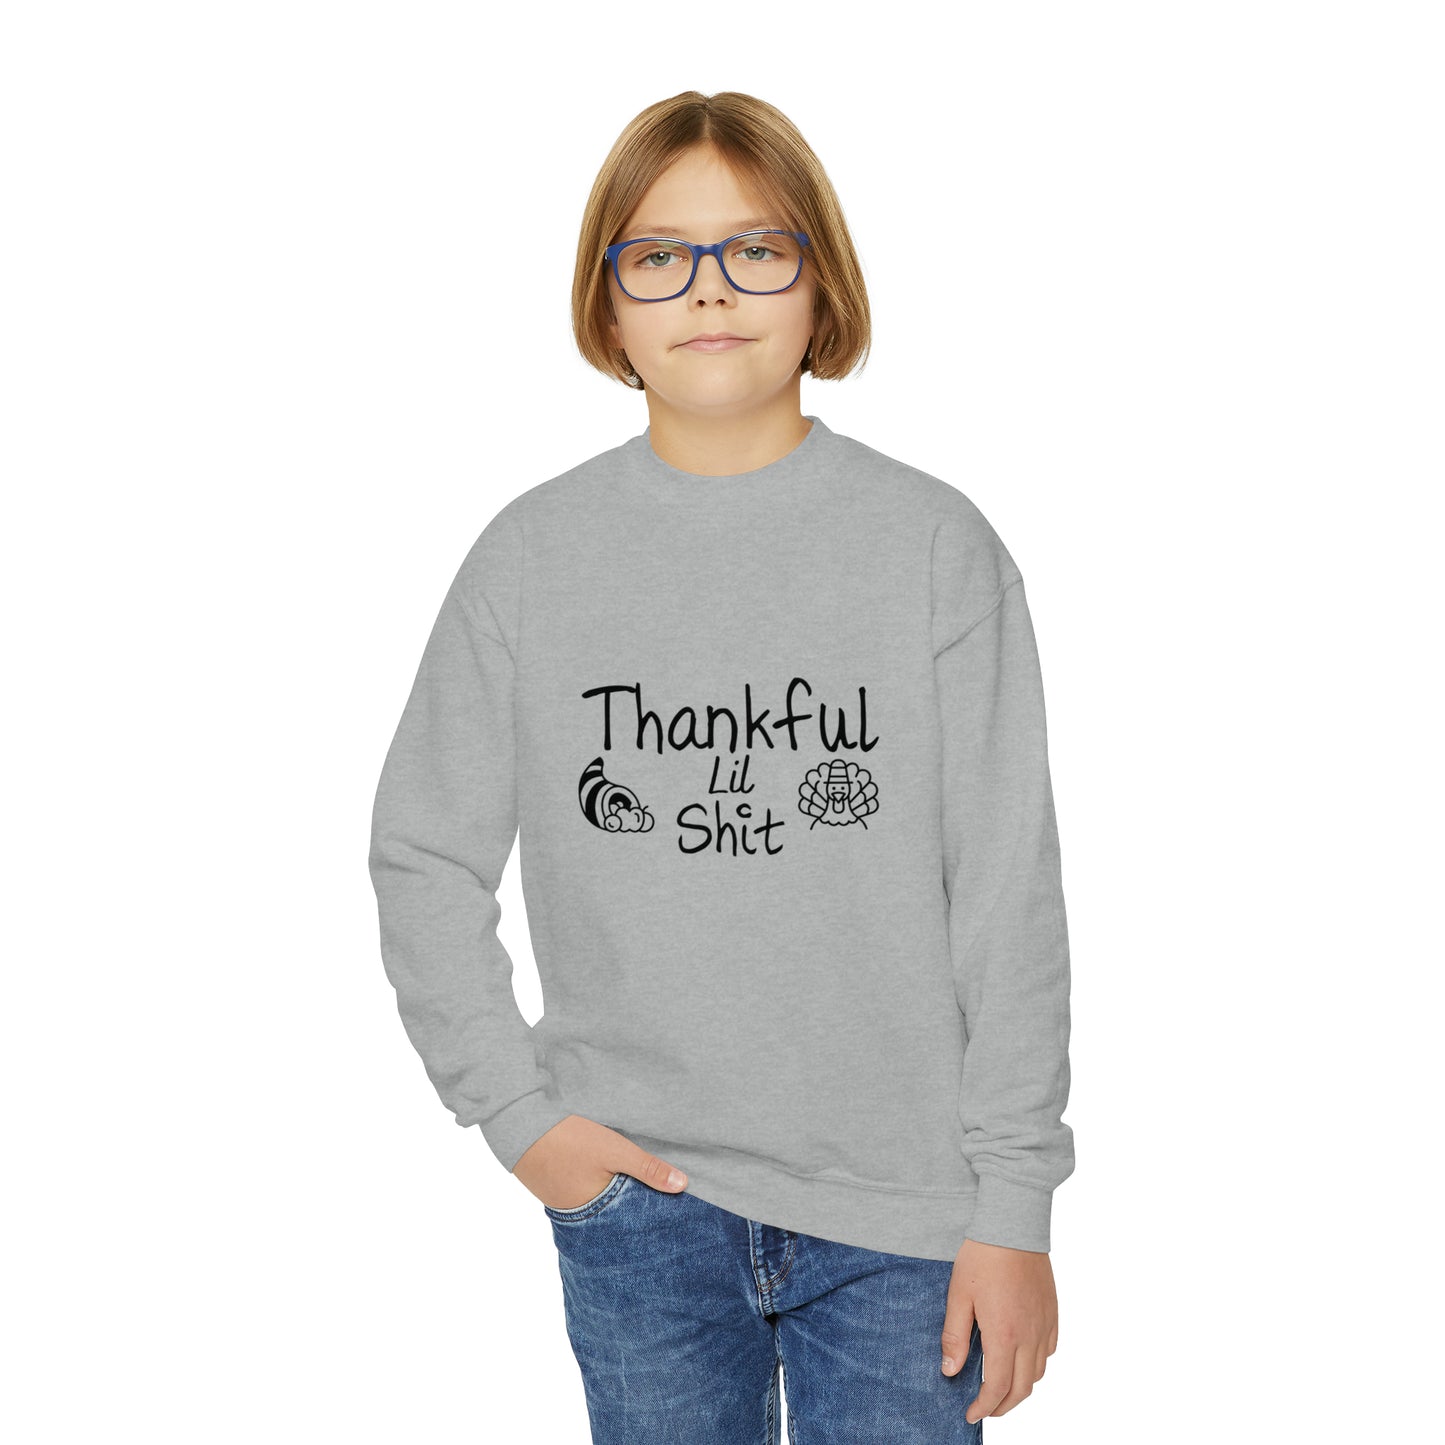 Youth Crewneck Sweatshirt, Holiday Sweatshirt, Thankful lil, Kids Loose Fitting Long Sleeve